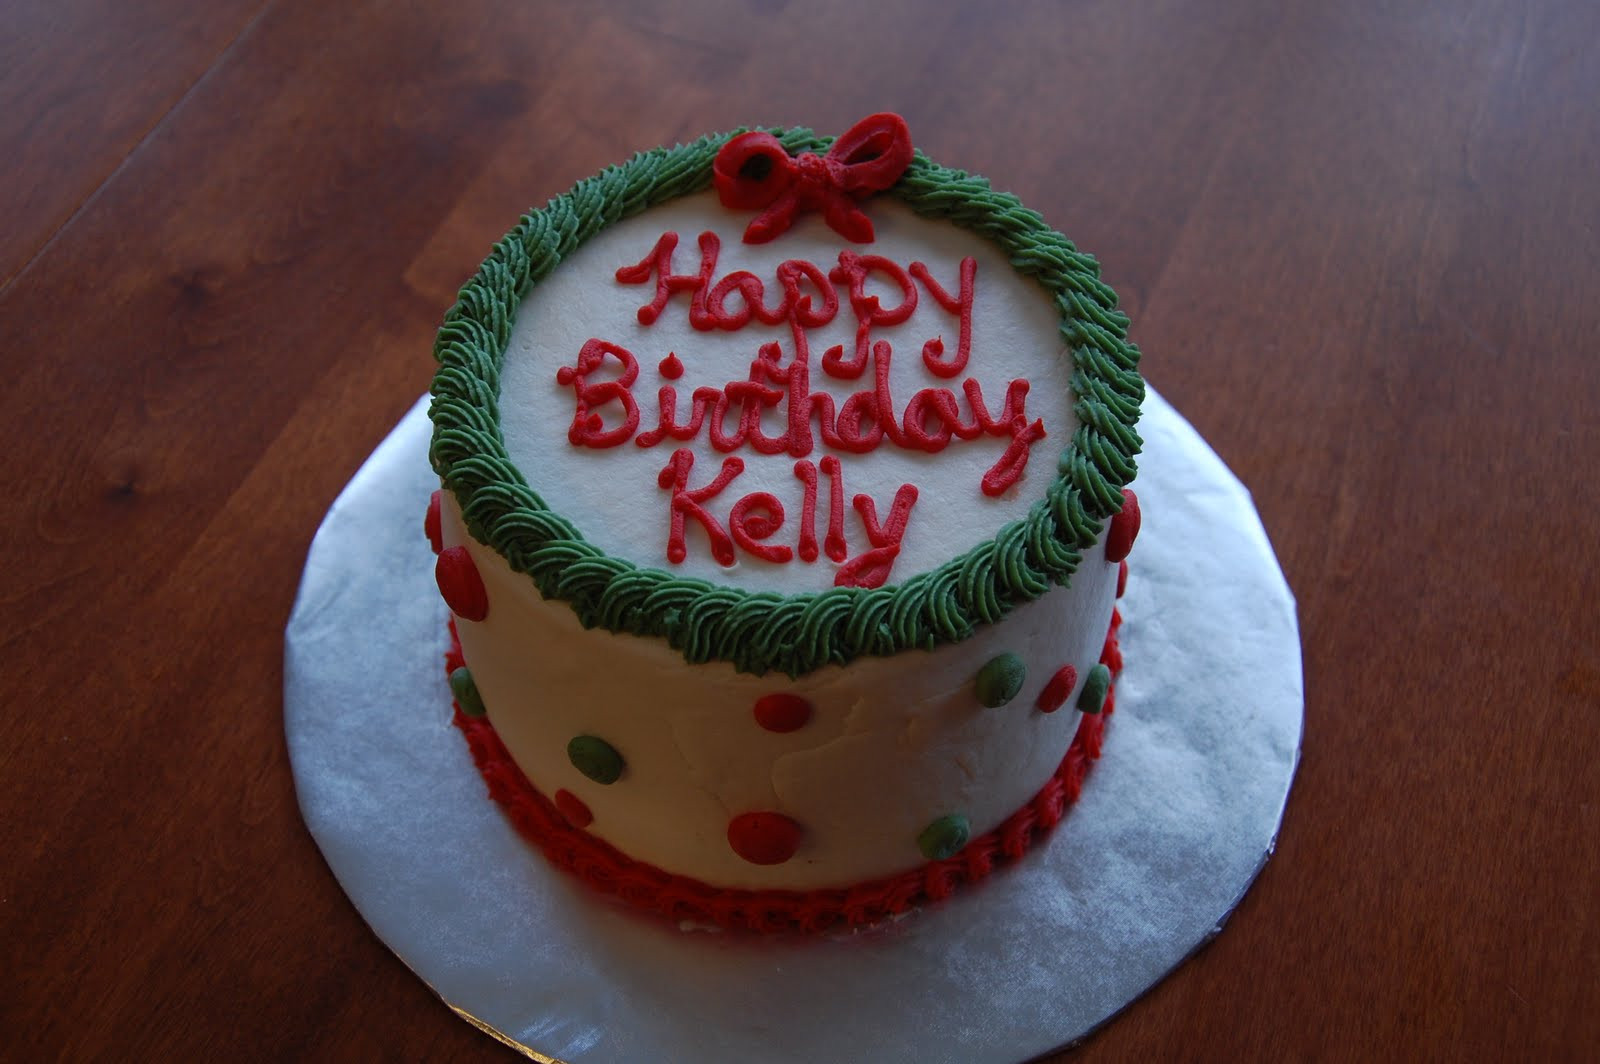 Happy Birthday Kelly Cake
 Angela Barton s Cakes Happy Birthday Christmas style